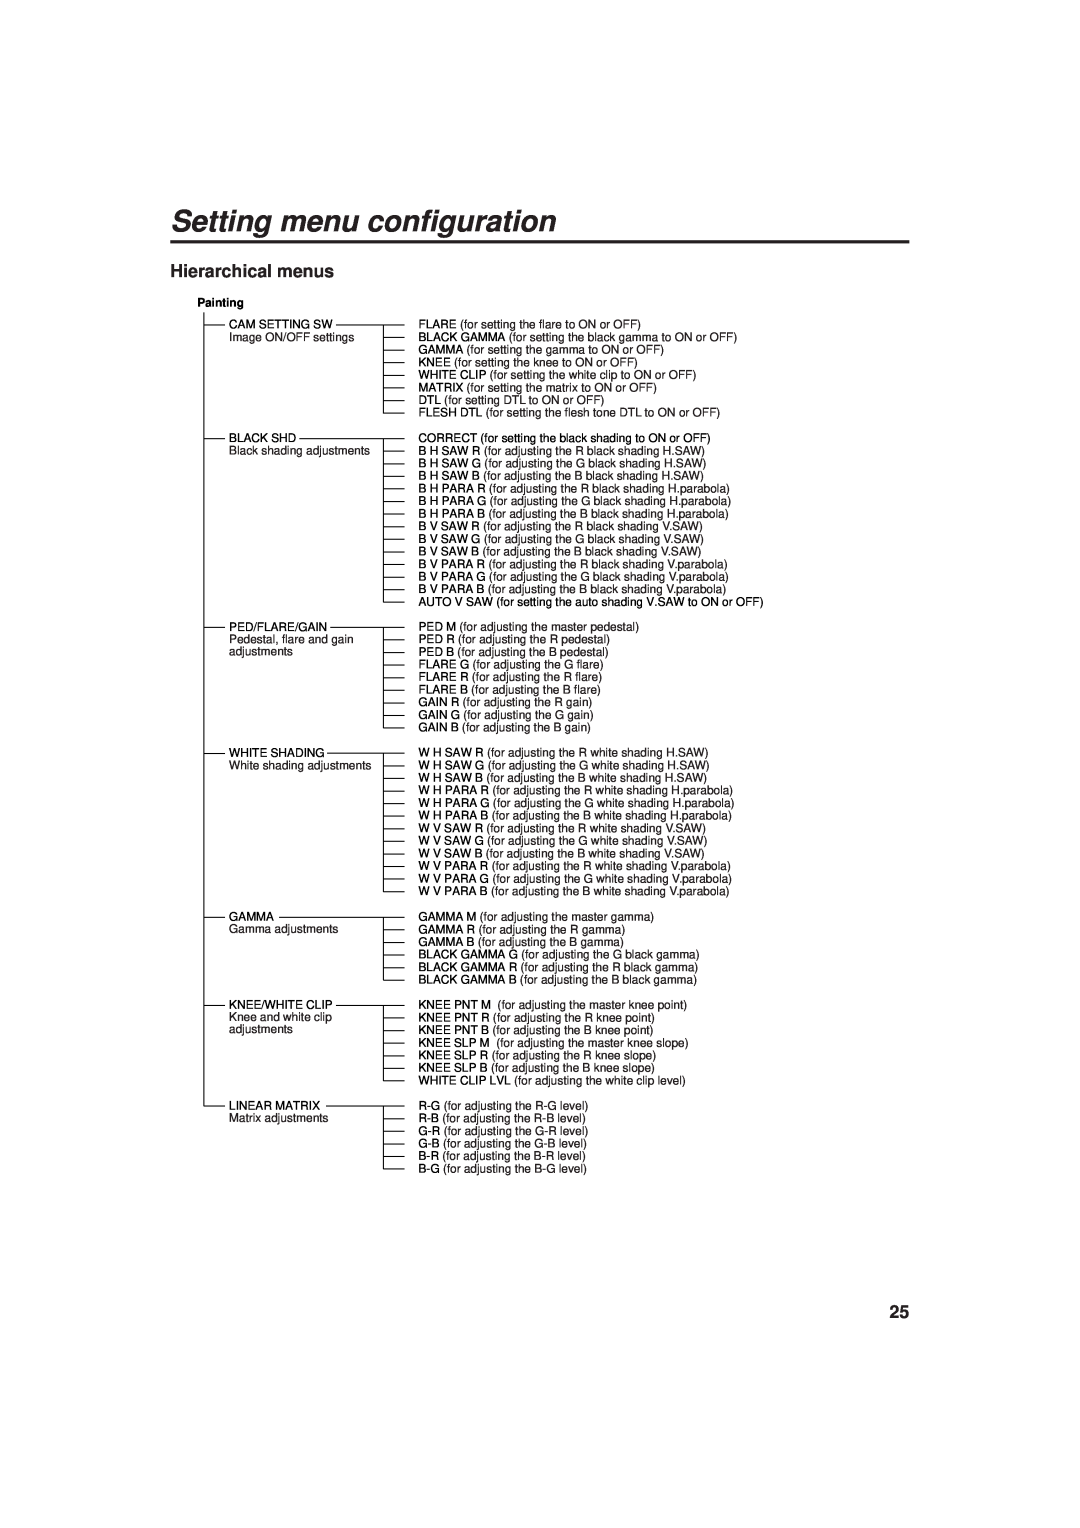 Panasonic AK-HC930 manual Setting menu configuration, Hierarchical menus, Painting, Cam Setting Sw, Black Shd, Gamma 